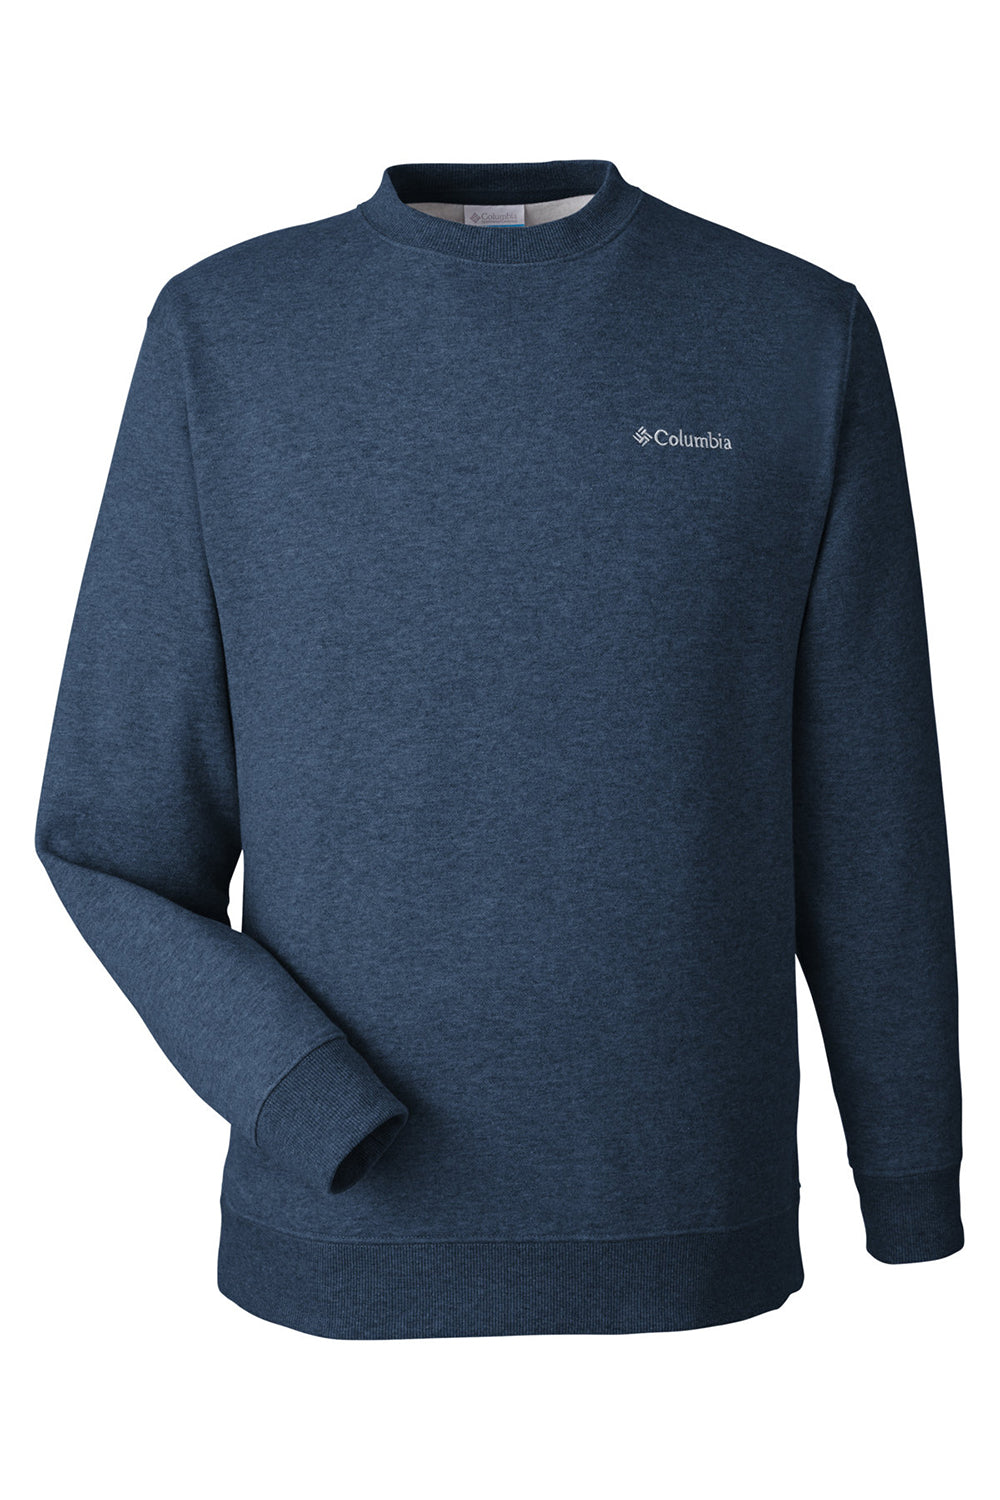 Columbia 1411601 Mens Hart Mountain Long Sleeve Crewneck Sweater Collegiate Navy Blue Flat Front